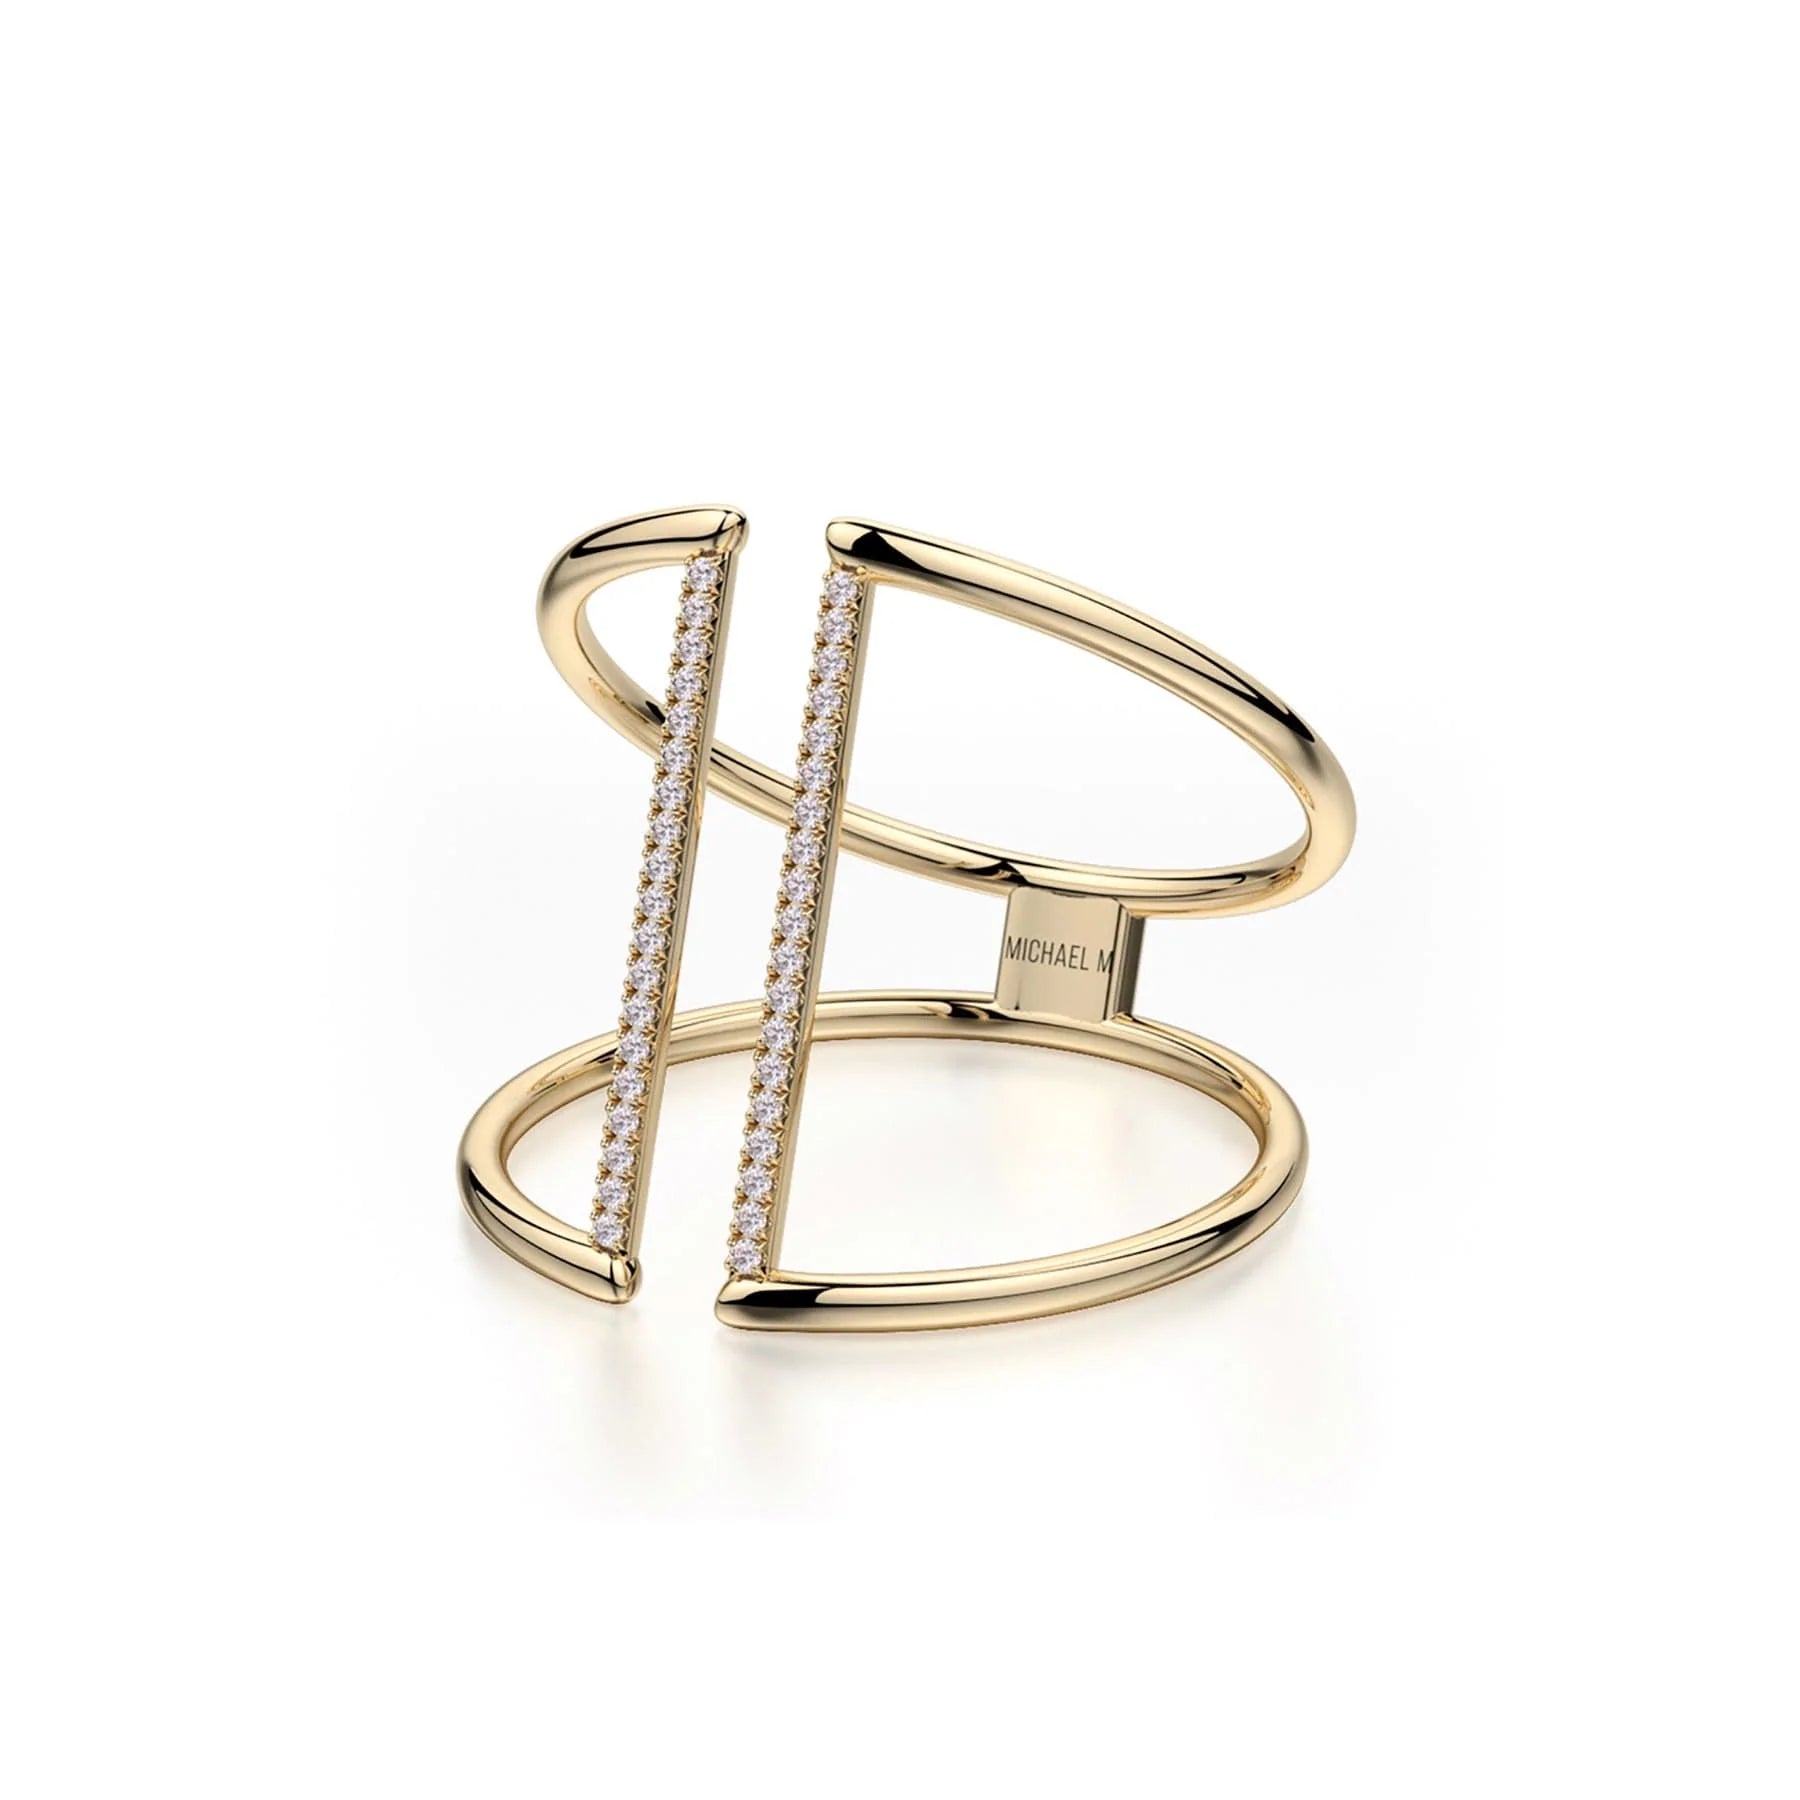 MICHAEL M Fashion Rings Double Band Diamond Bar Ring